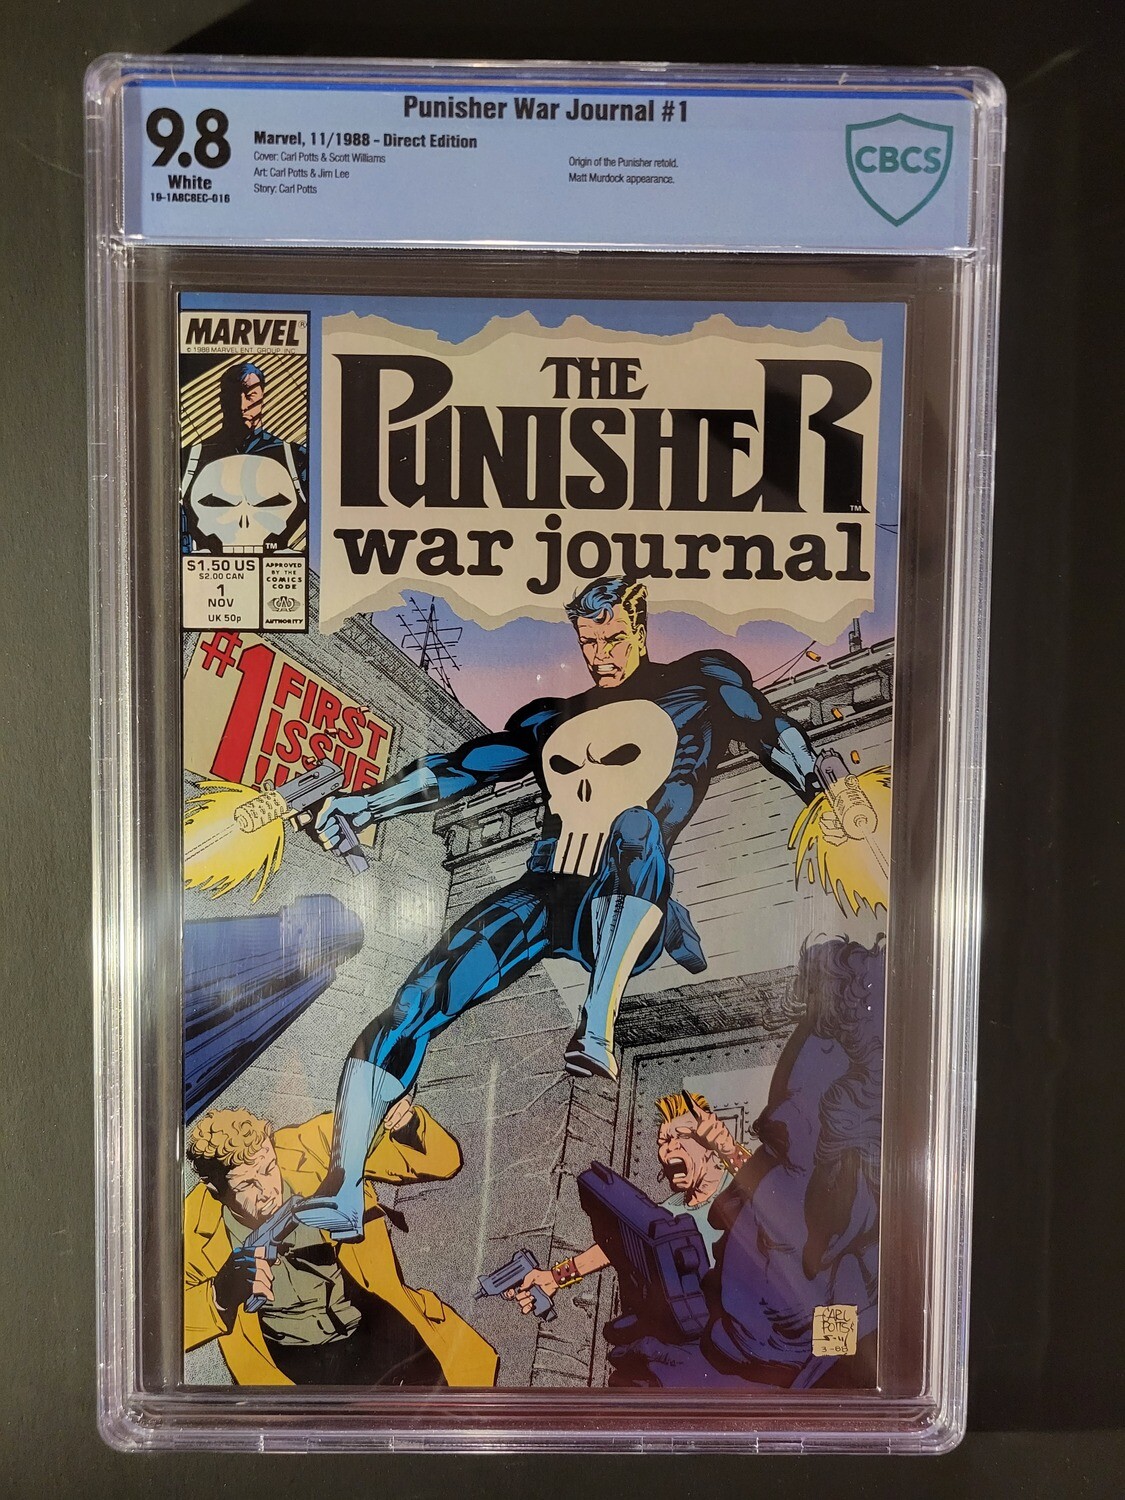 Punisher War Journal #1 CBCS 9.8 Origin of Punisher retold